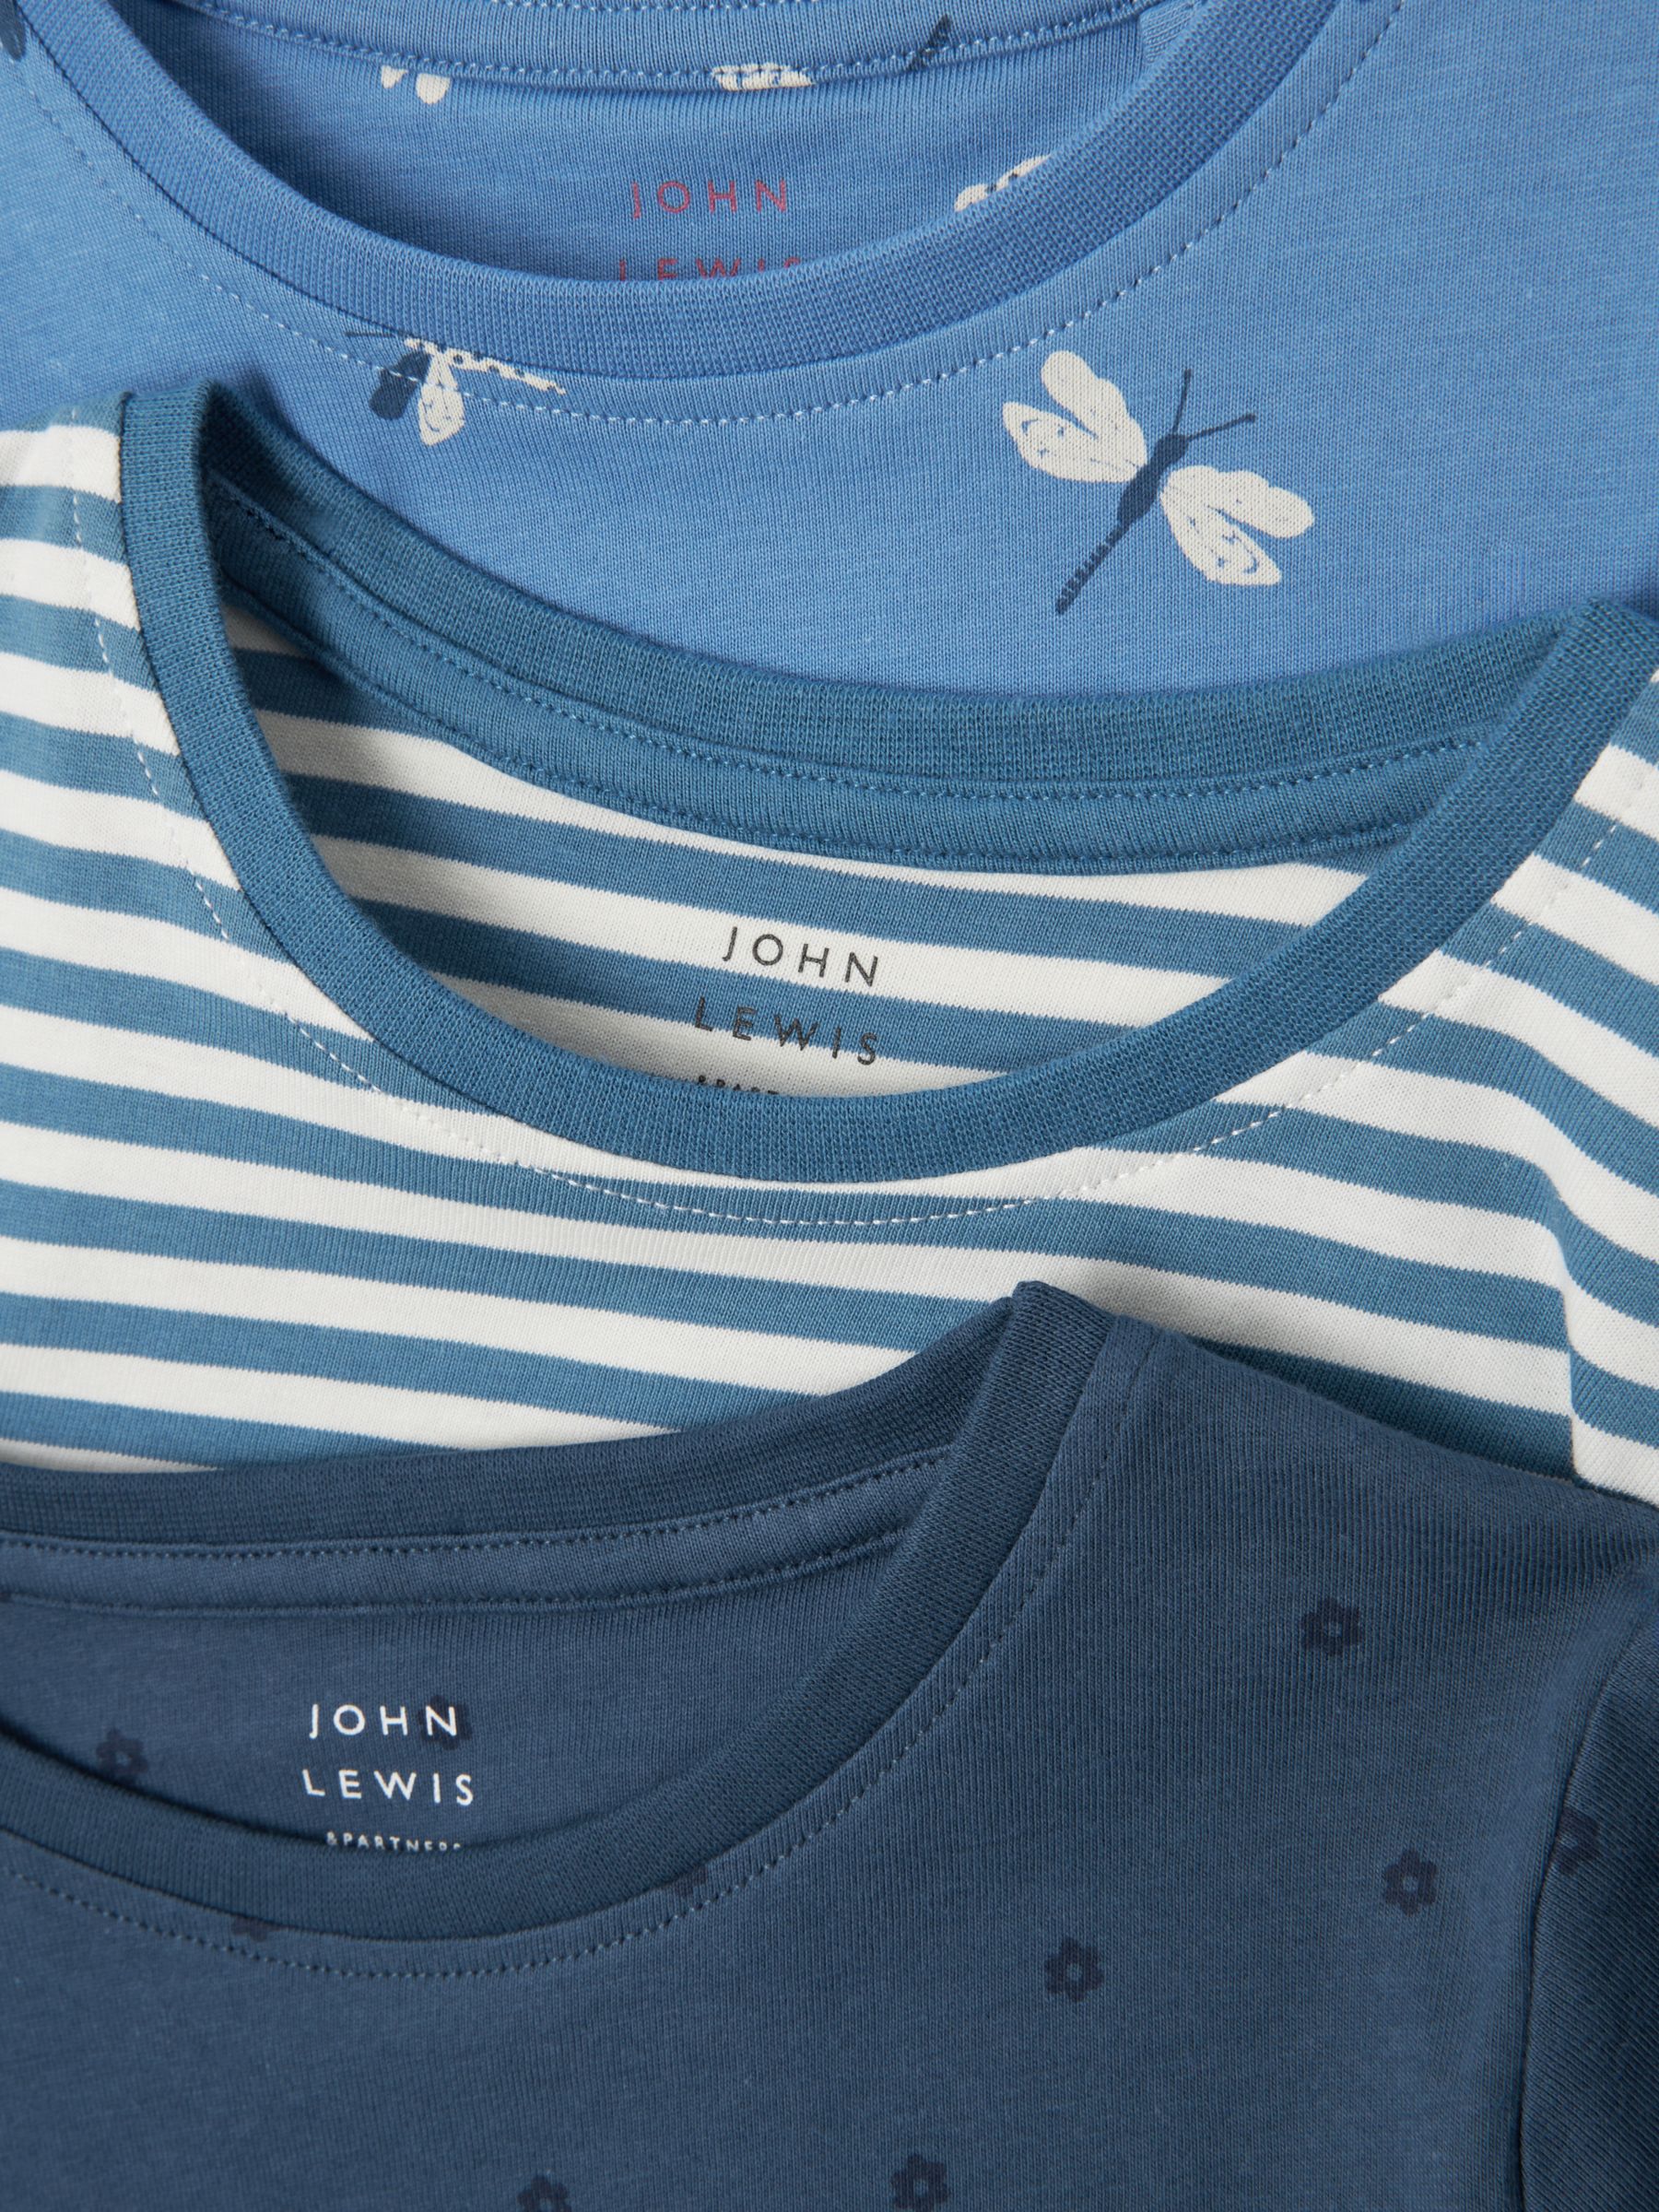 John Lewis Kids' Dragonfly/Stripe/Flower Long Sleeve T-Shirts, Pack of 3, Blue/Multi, 7 years